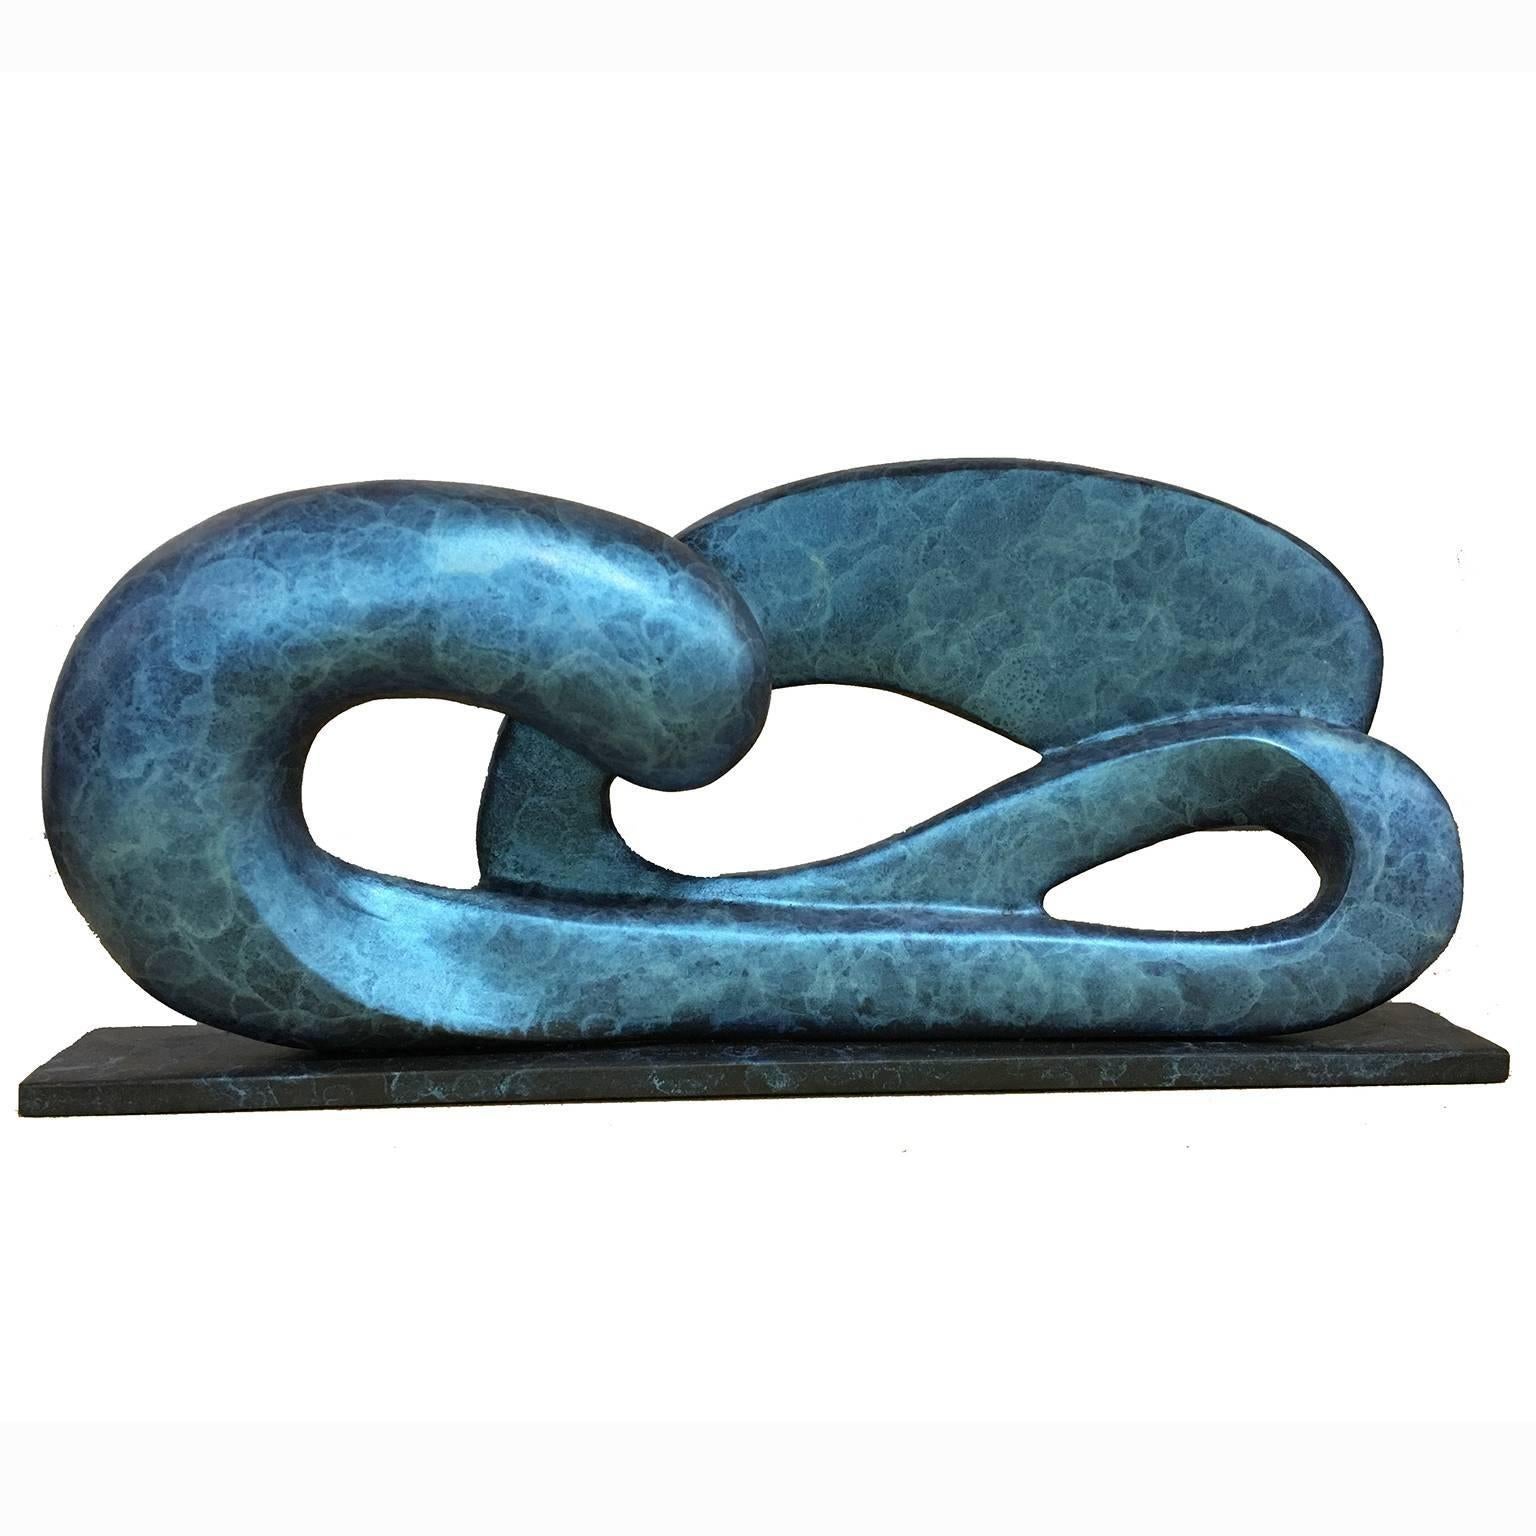 du Vent abstract sculpture bronze - Sculpture by Catherine Bohrman